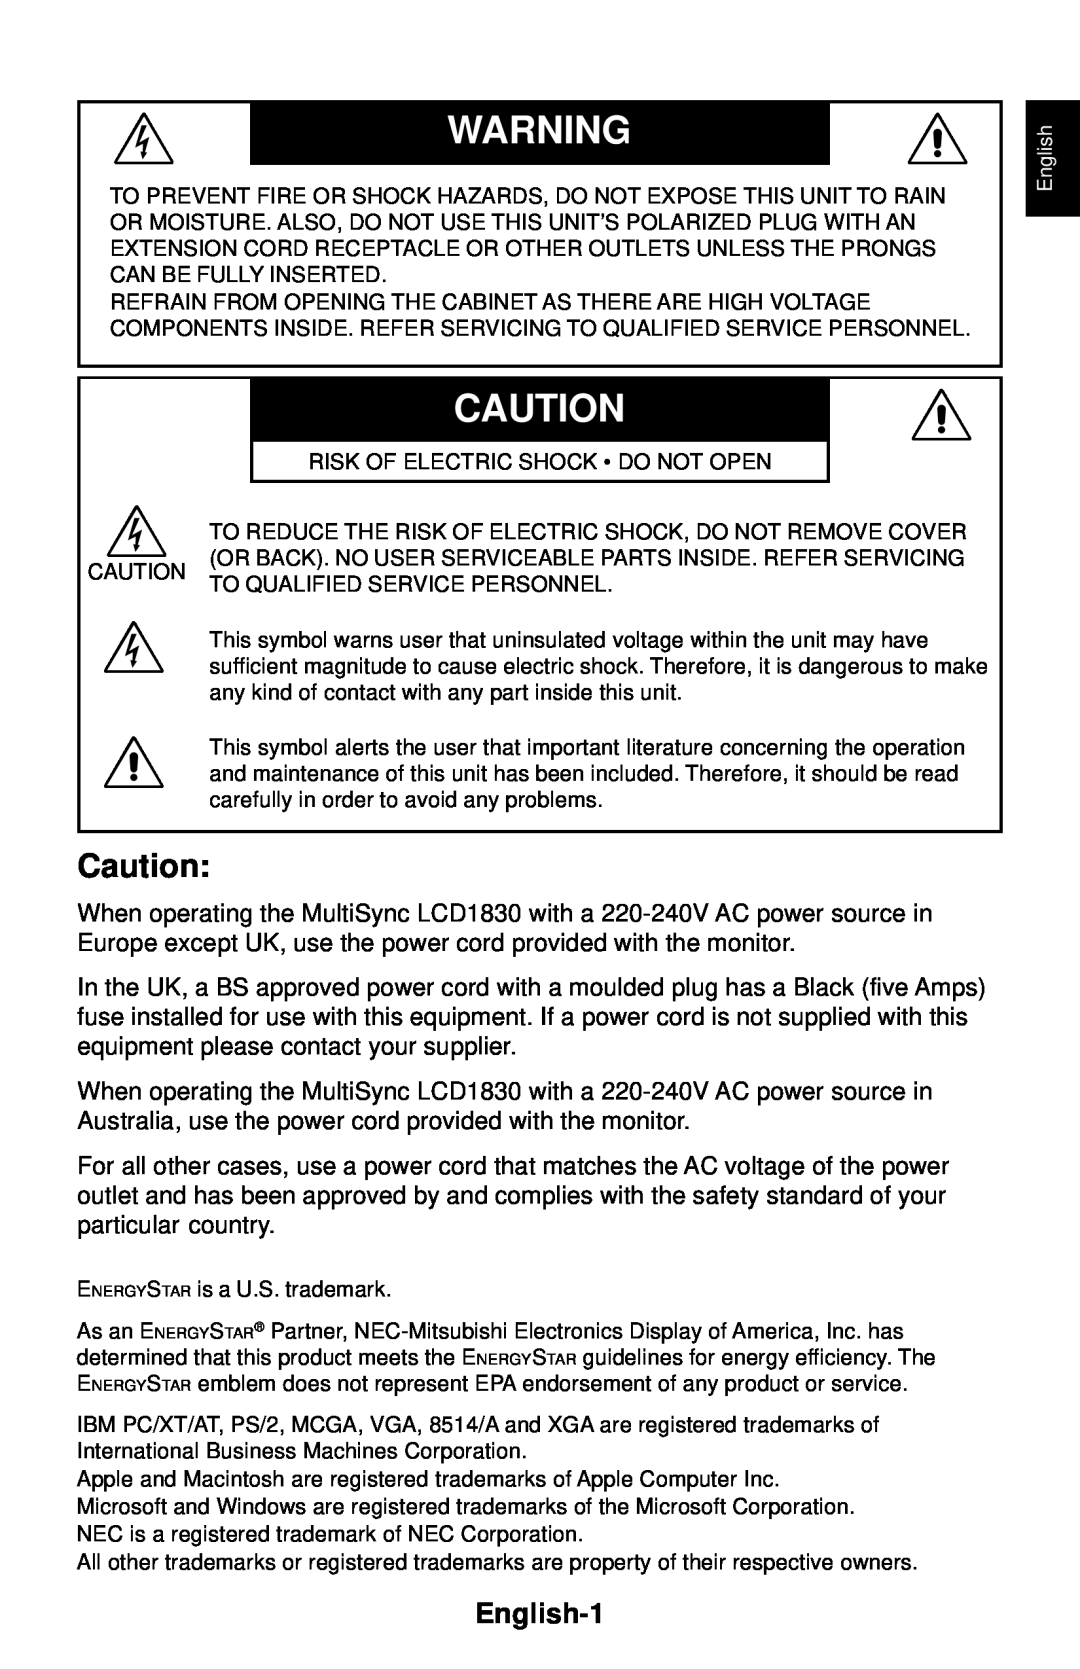 NEC LCD1830 user manual English-1 